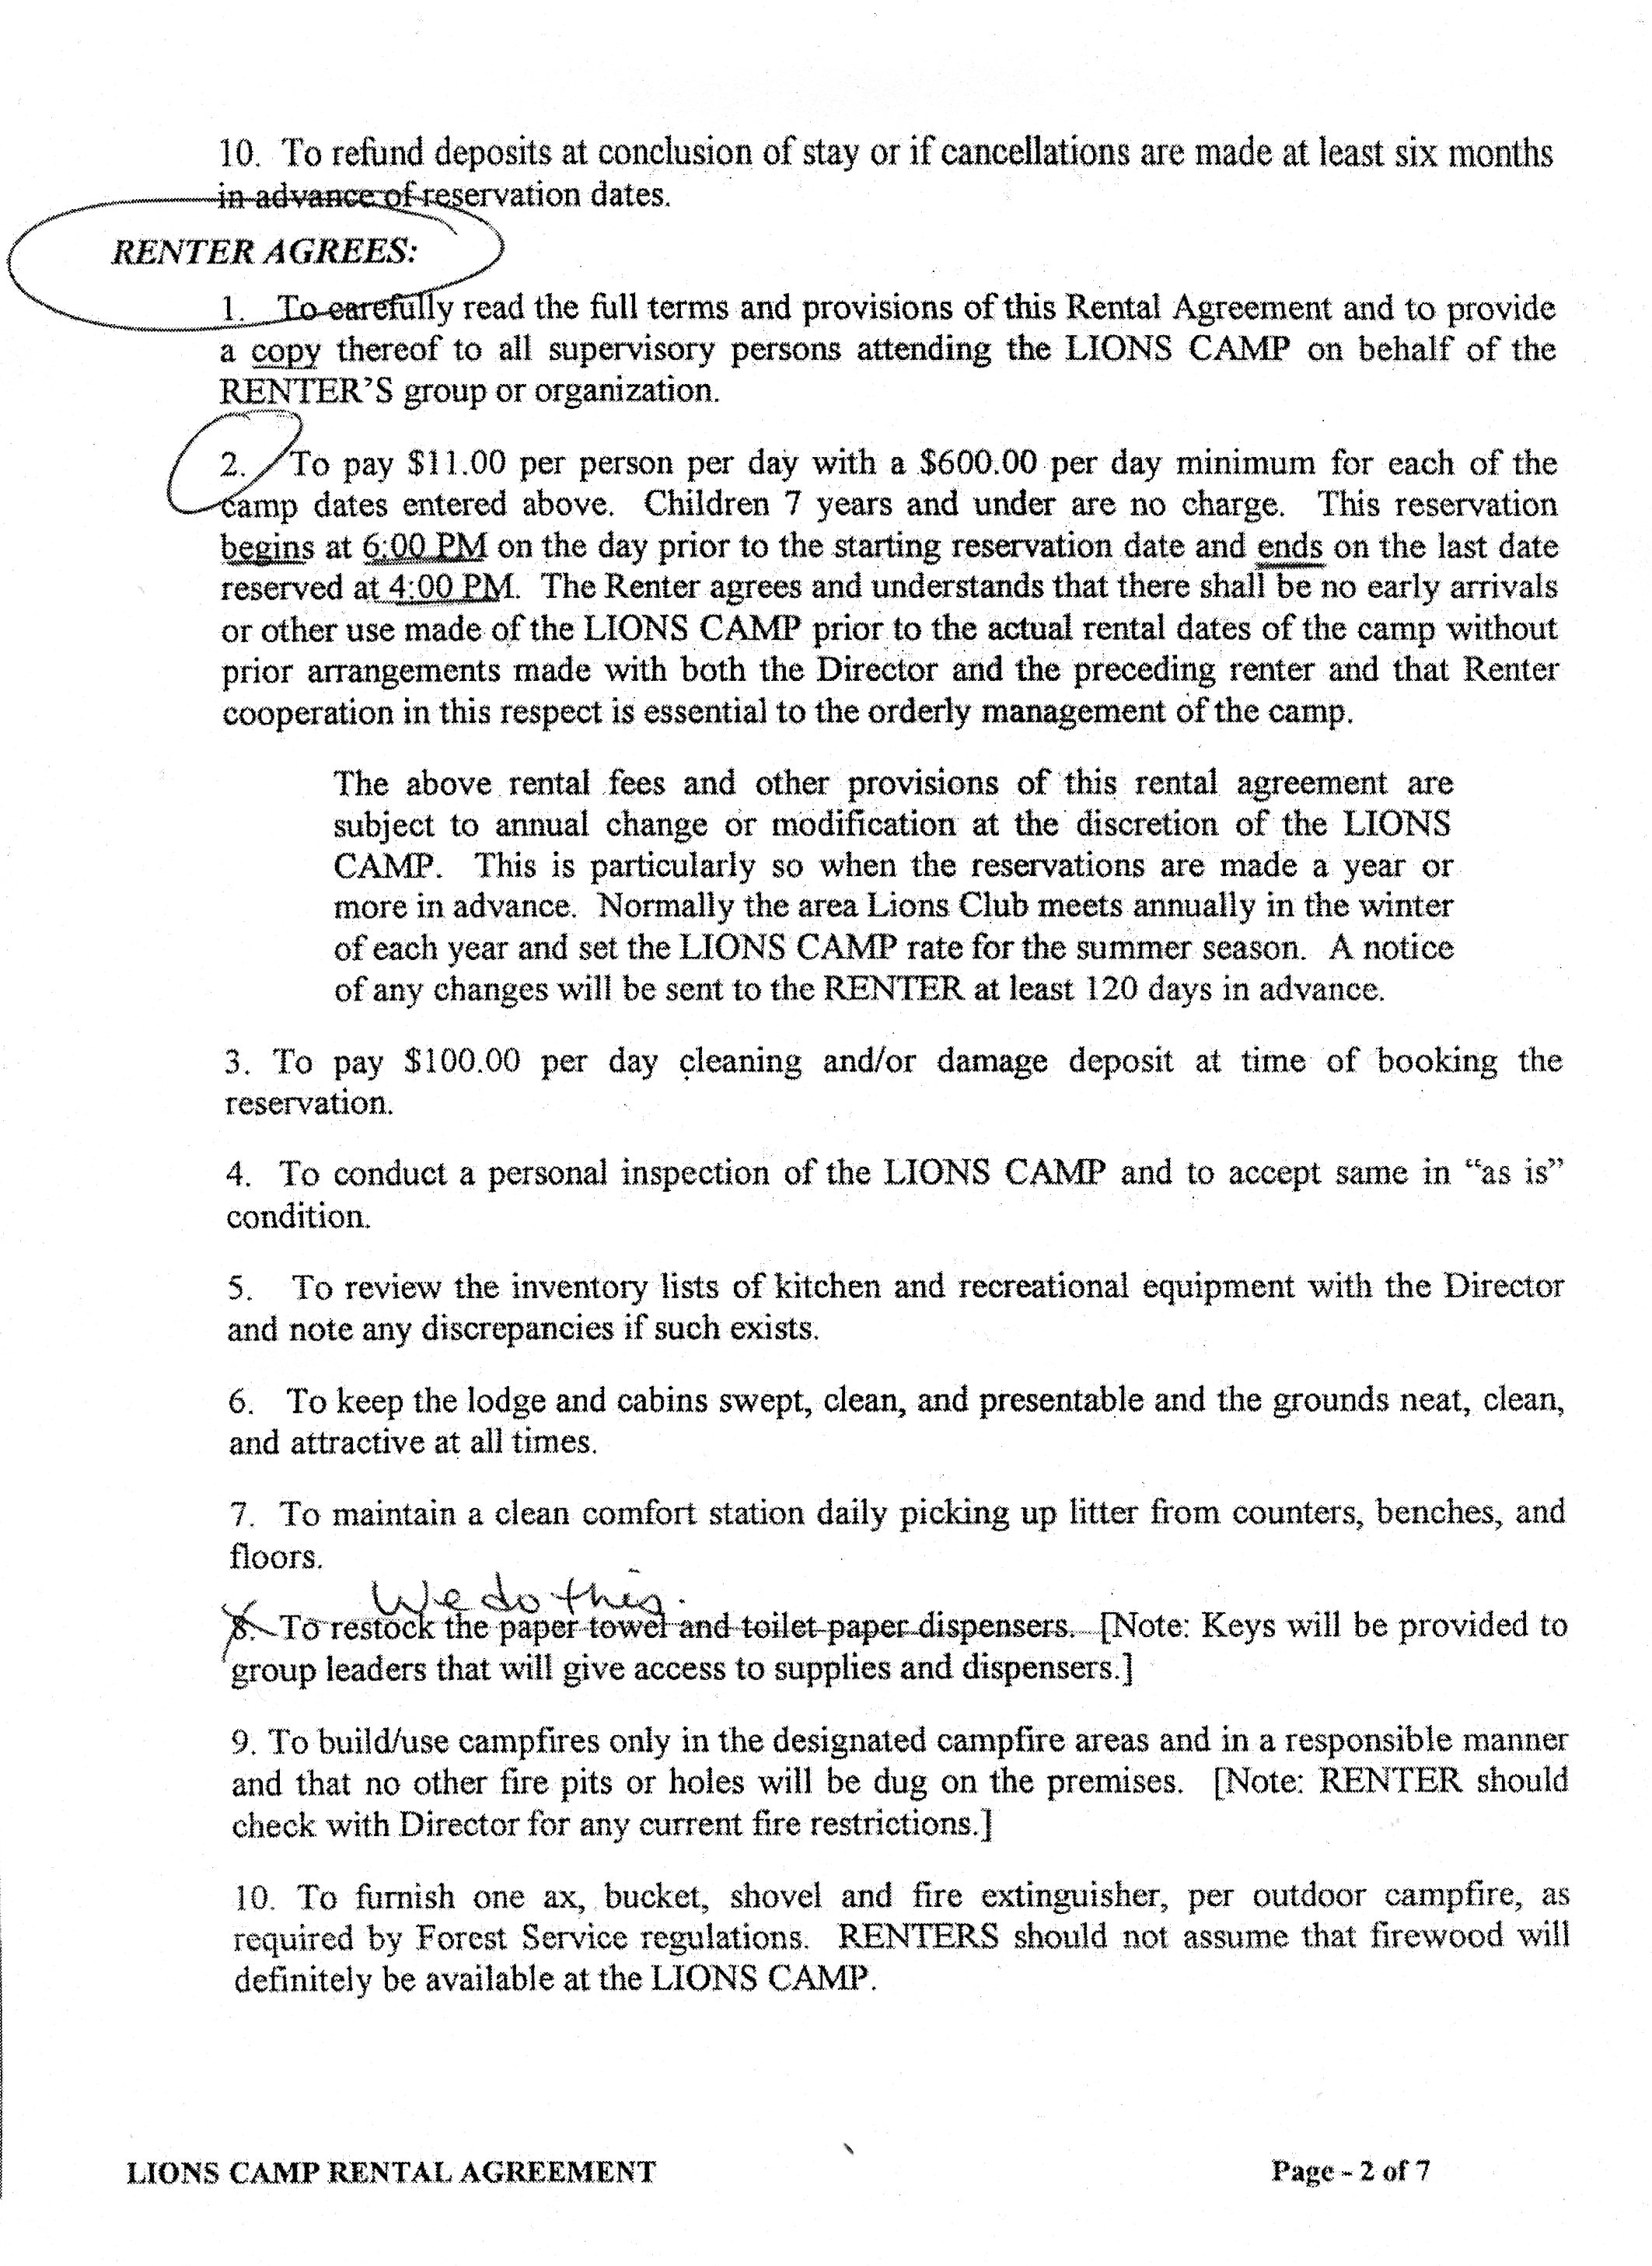 Rental Agreement Pg. 2 of 7
